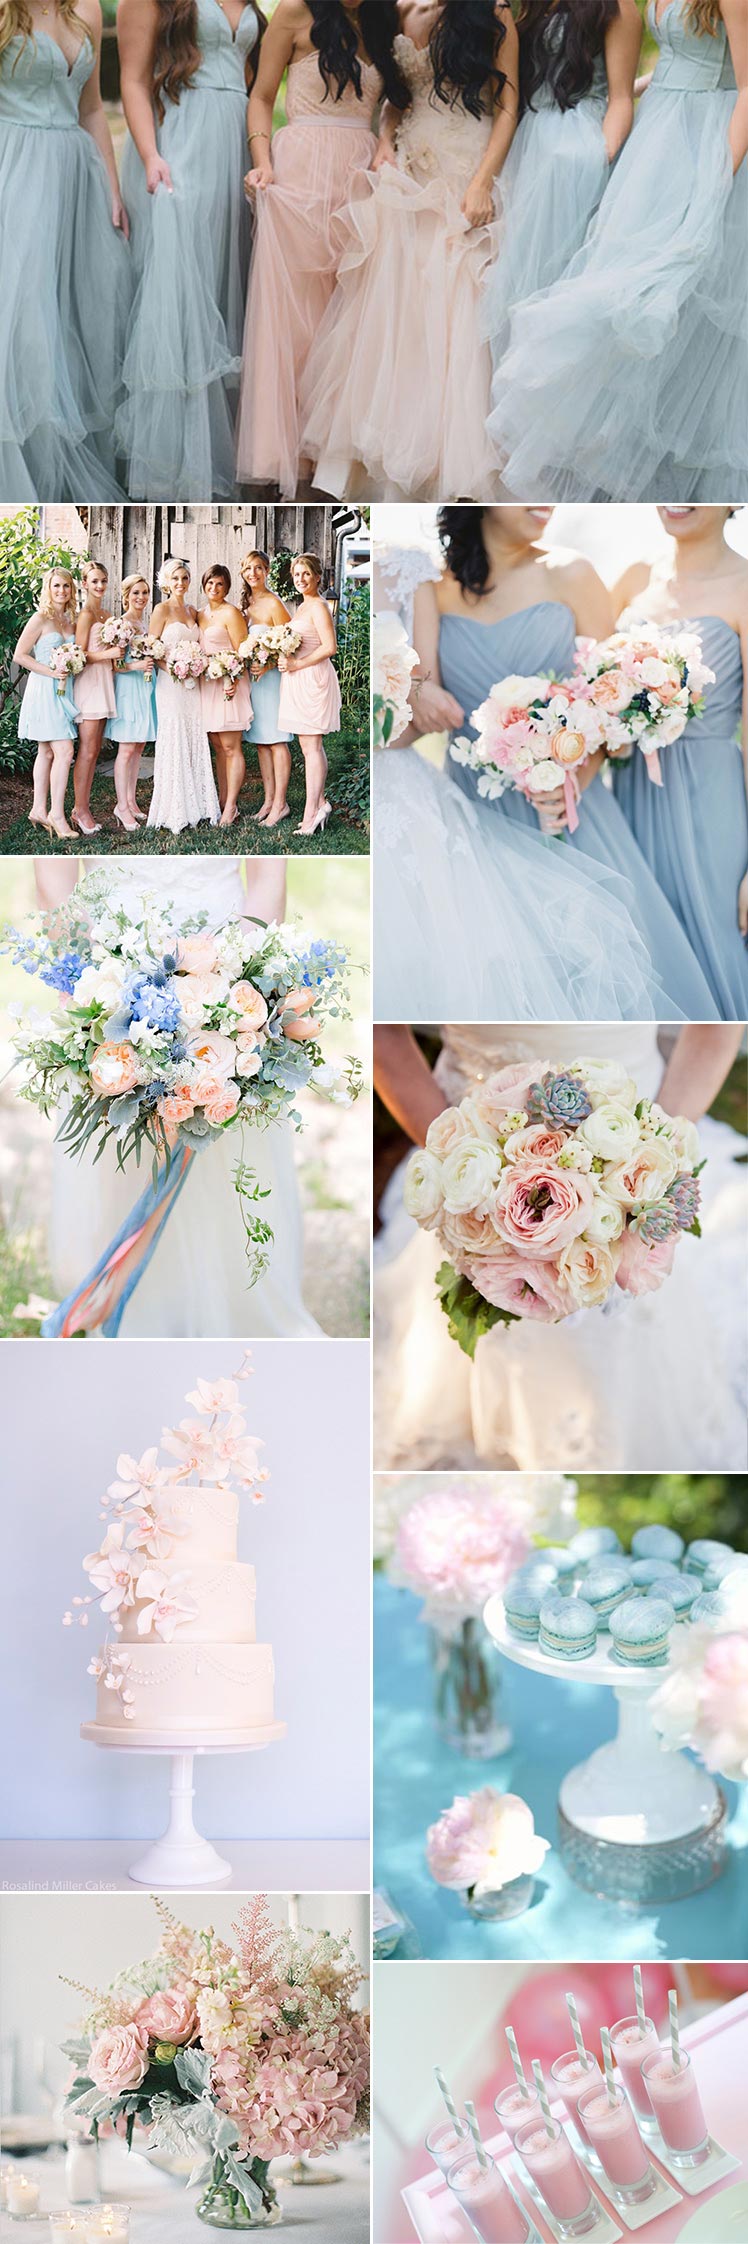 Pink and blue wedding colour scheme inspiration